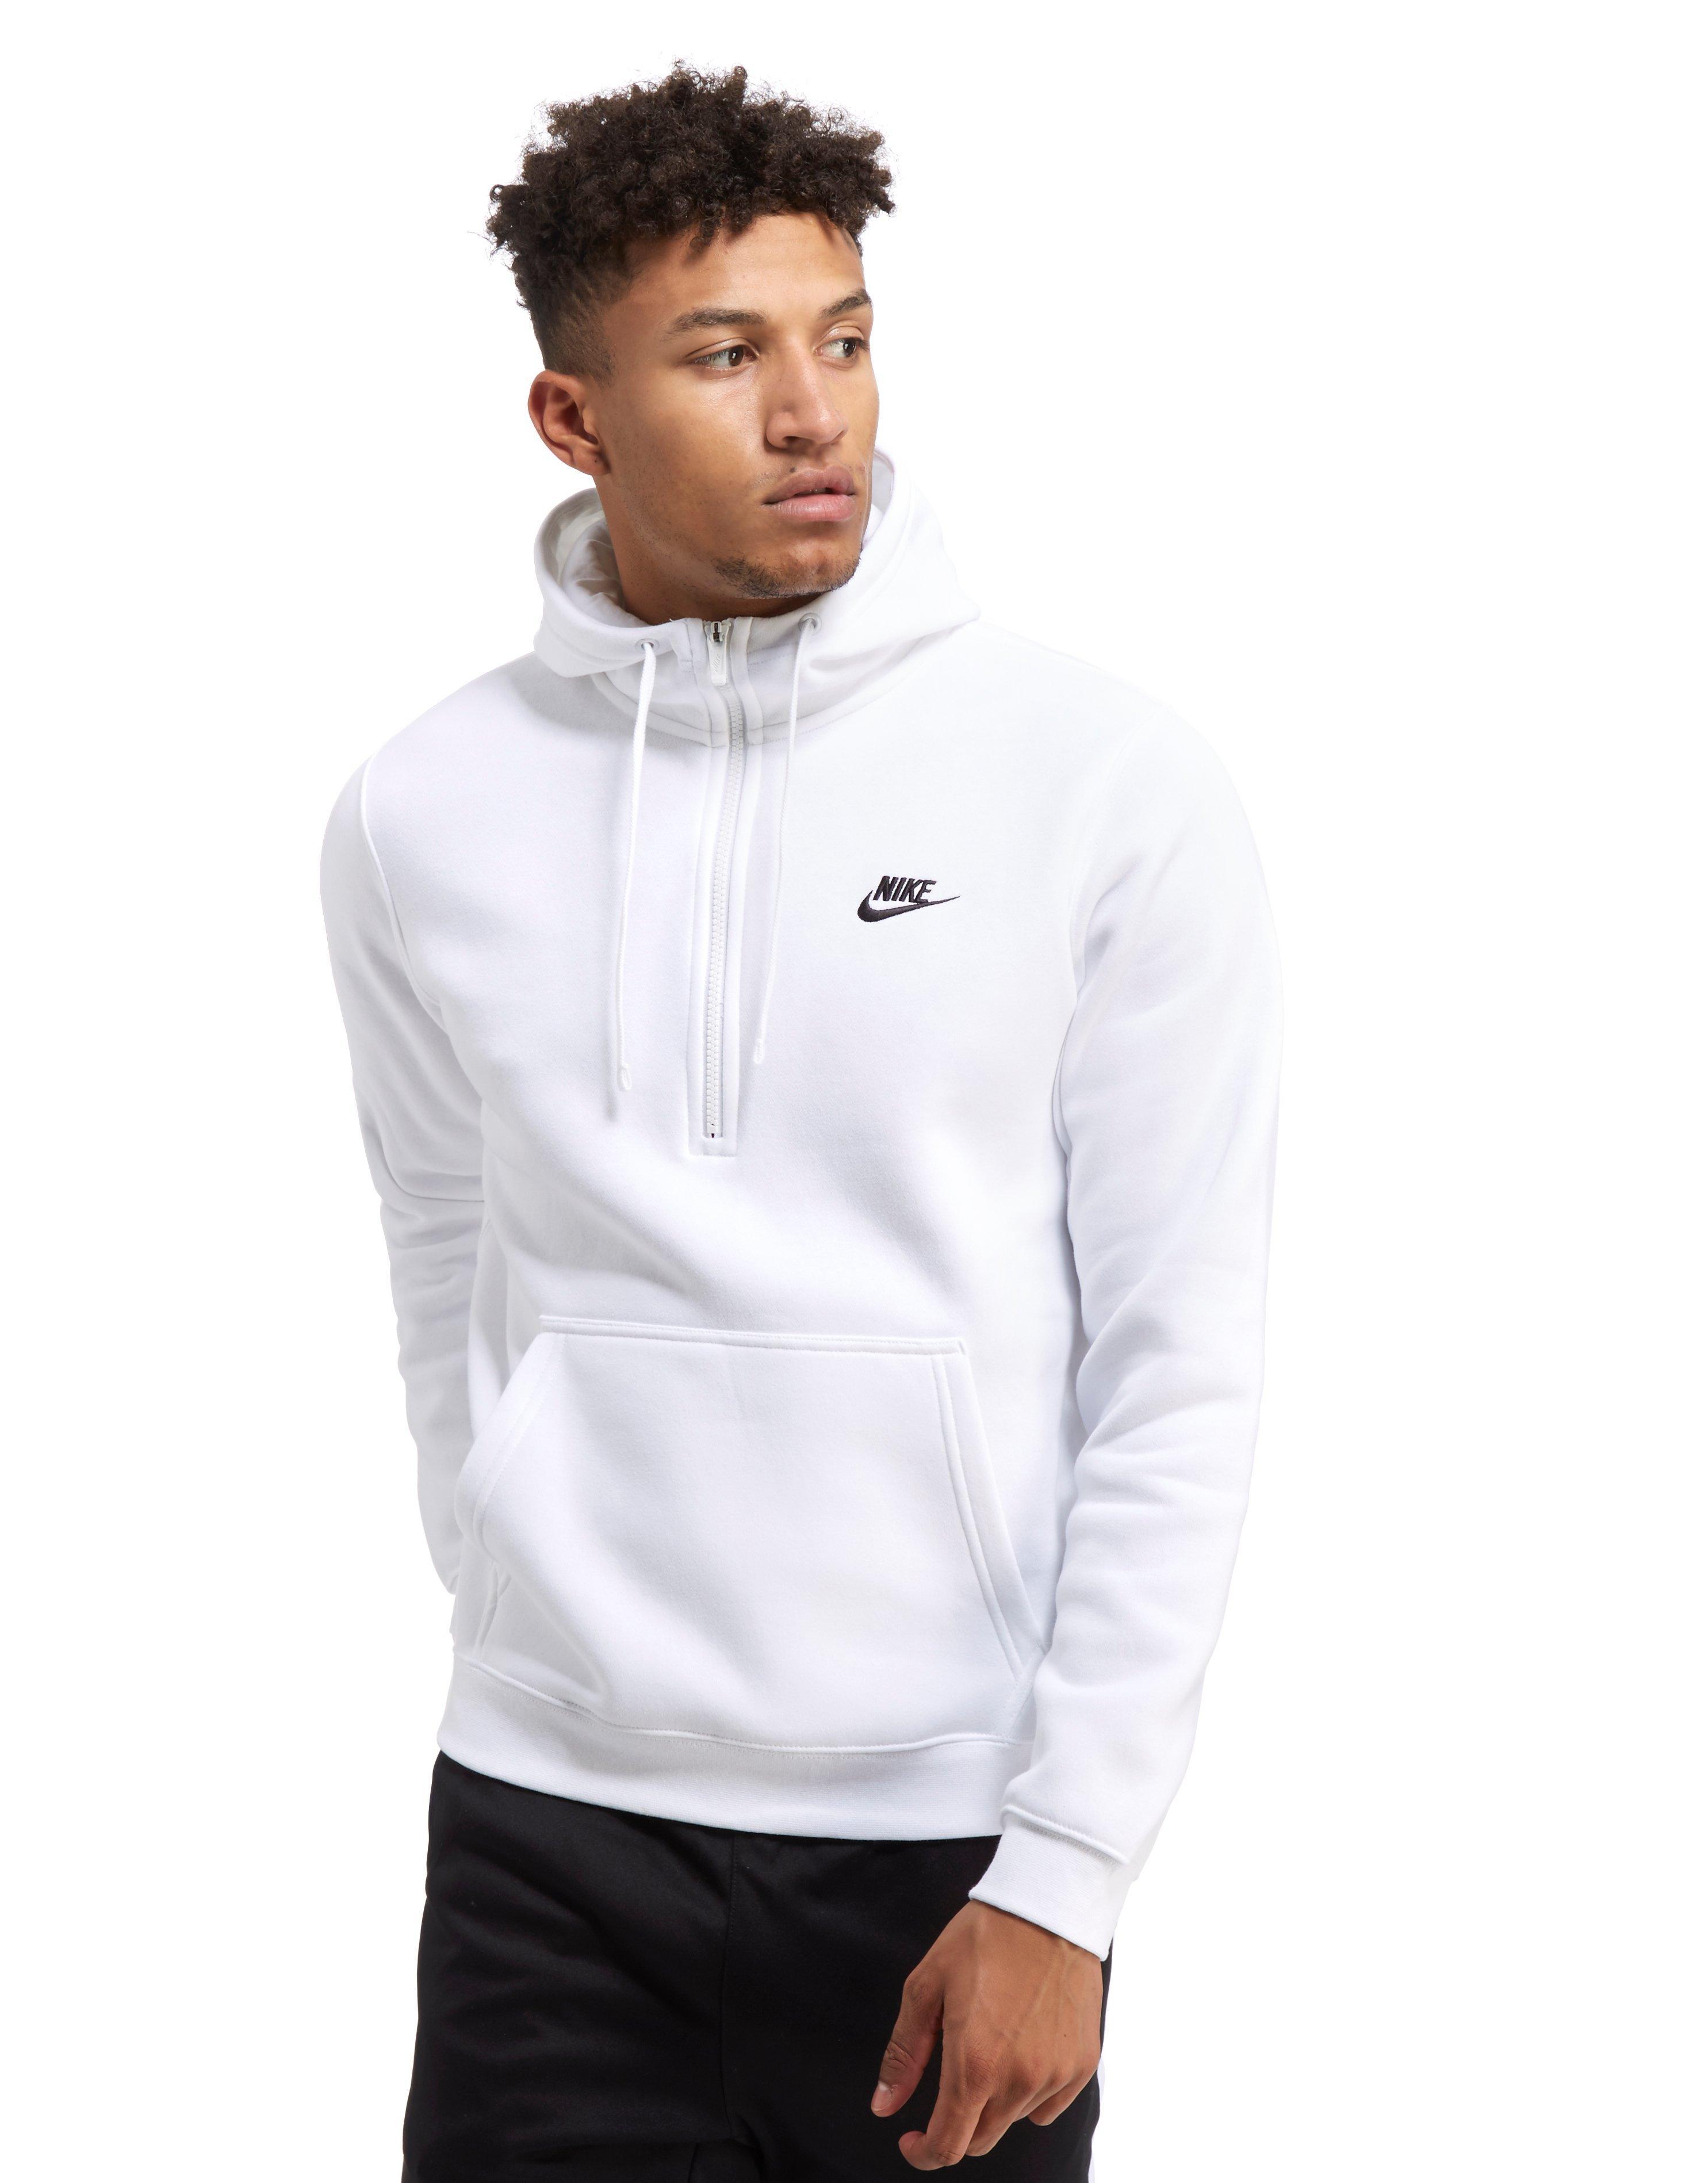 Nike Cotton Club Half-zip Hoody in White for Men - Lyst